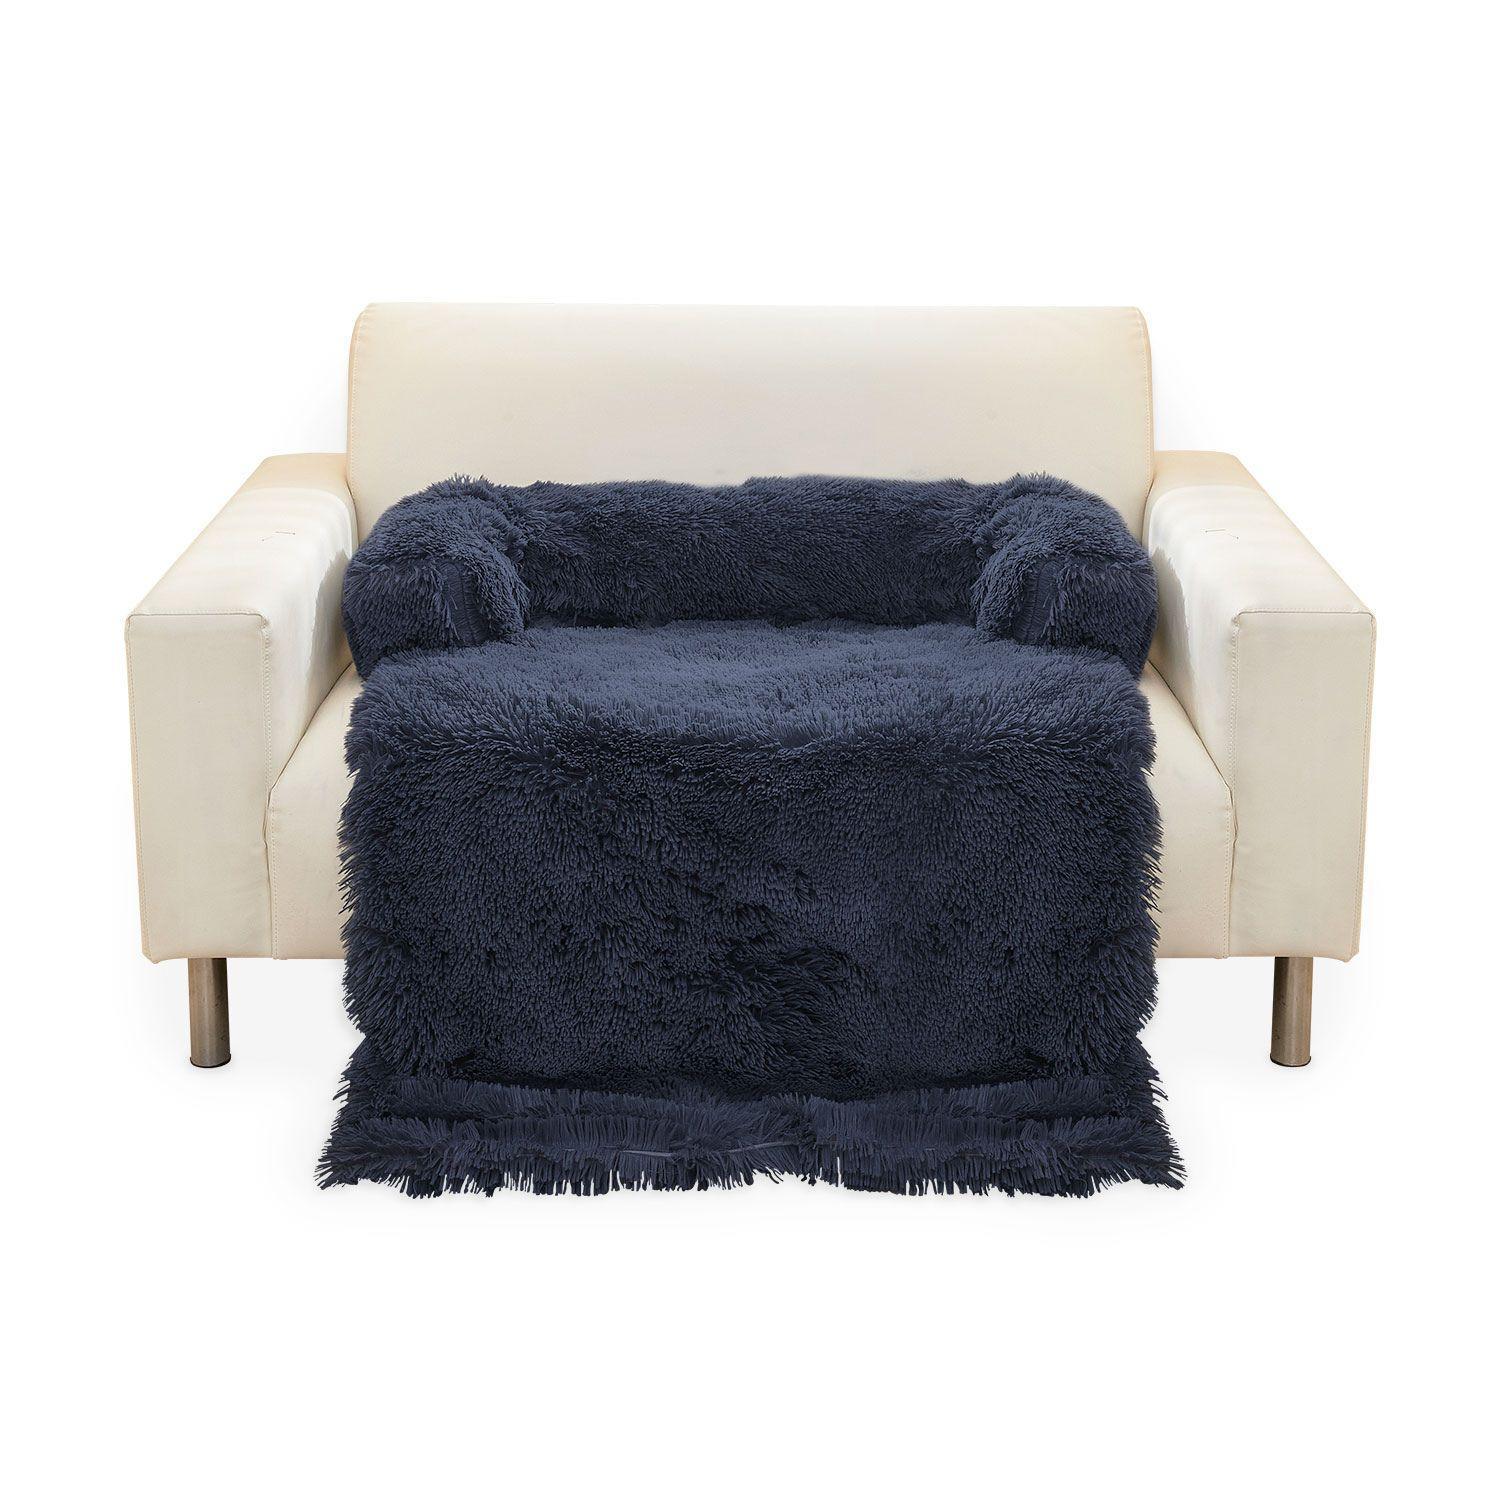 Floofi Pet Sofa Cover Soft with Bolster Machine Washable XL Size Dark Blue